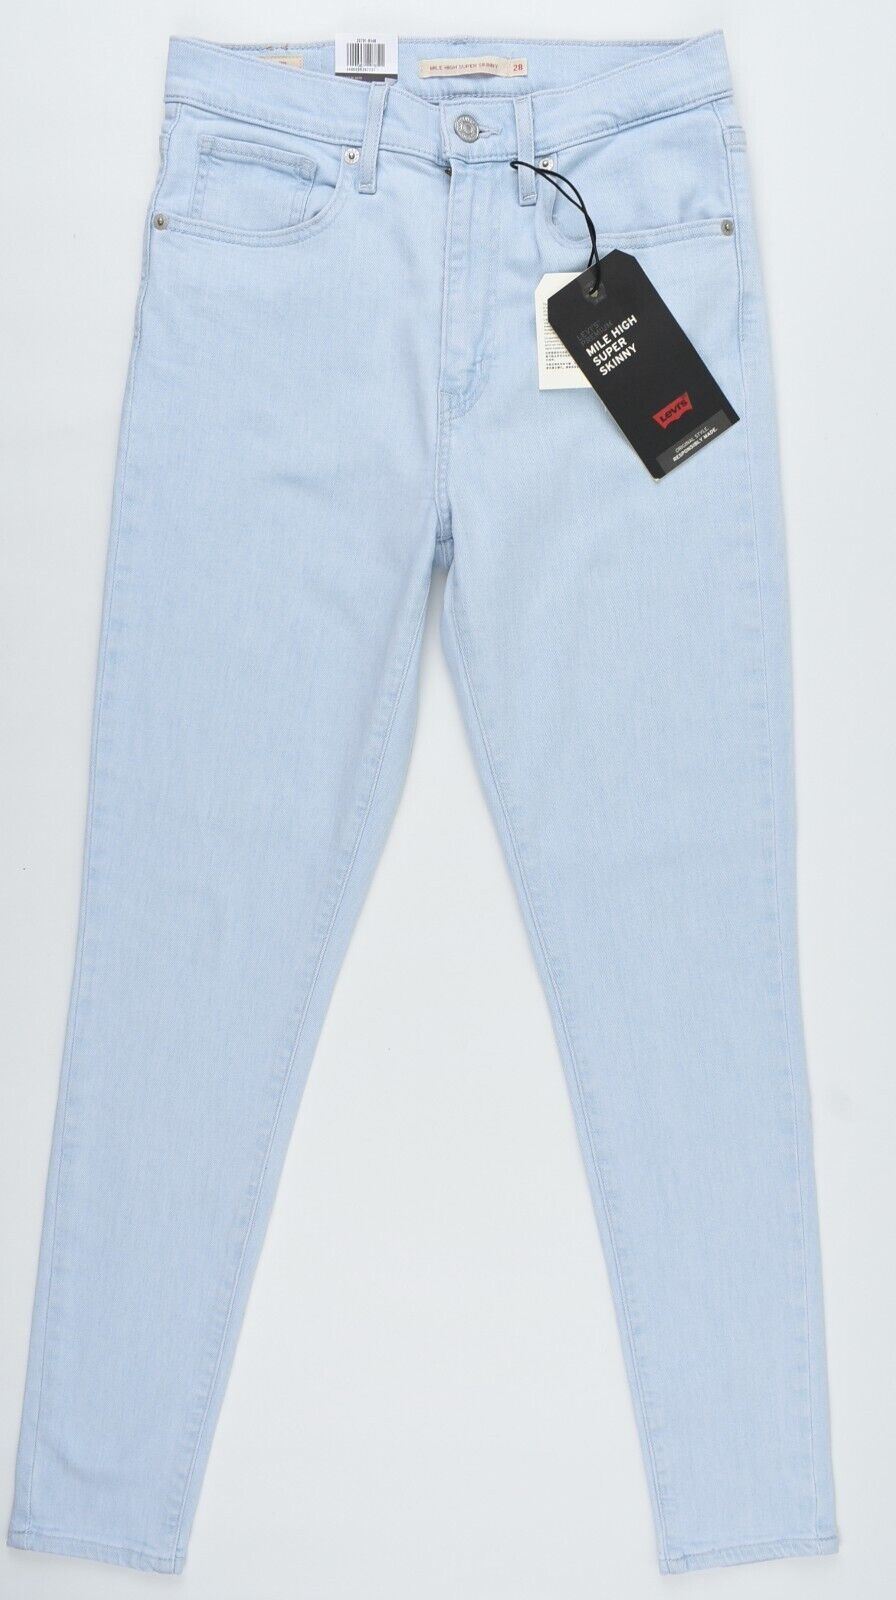 LEVI'S Women's Mile High Super Skinny Stretch Denim Jeans, Blue, size W28 L28